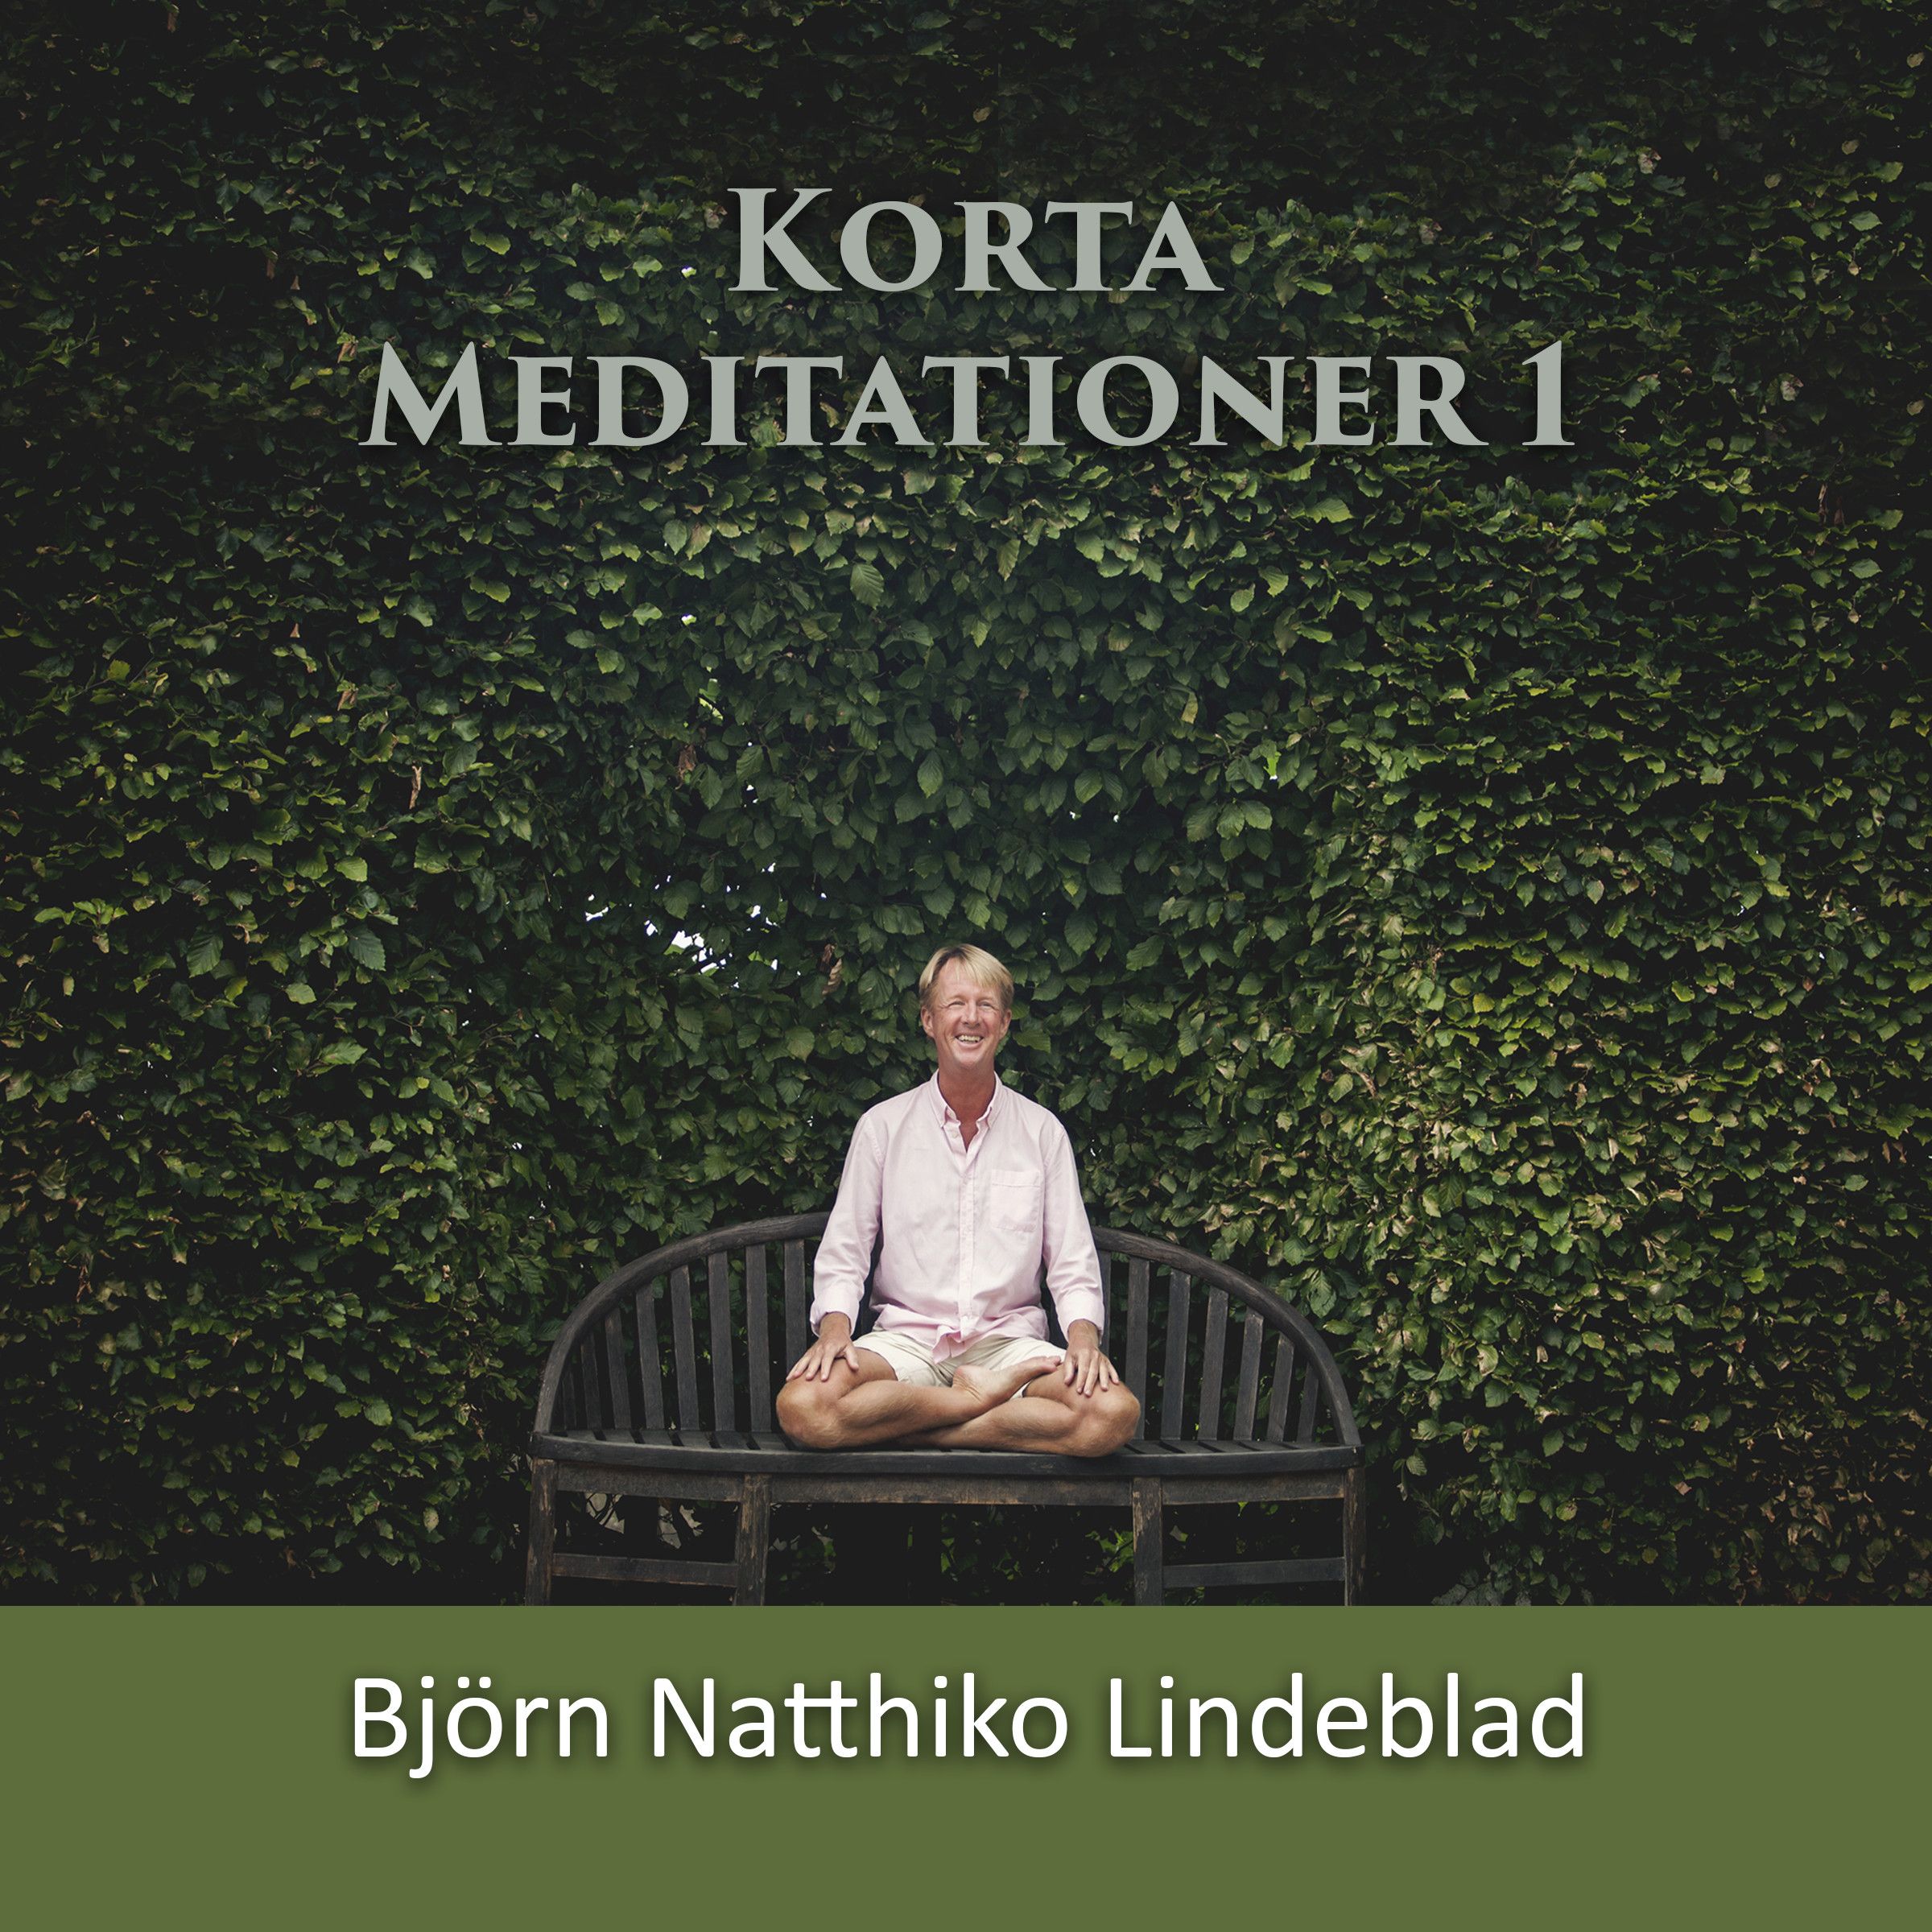 Korta Meditationer 1, audiobook by Björn Natthiko Lindeblad